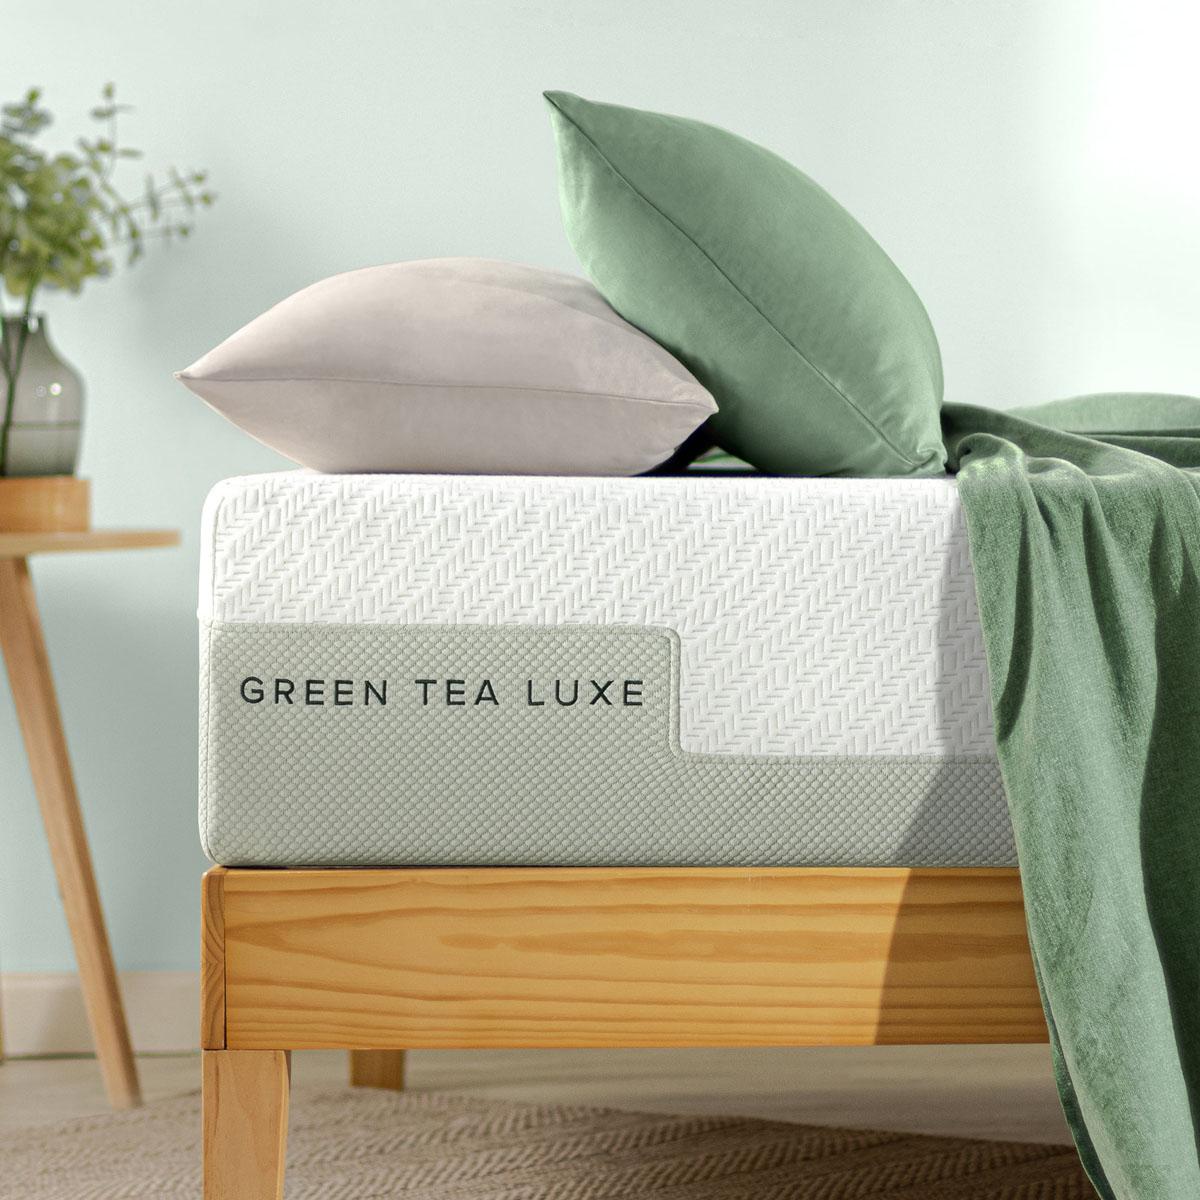 Zinus 12in Green Tea Luxe Queen Memory Foam Mattress for $199 Shipped